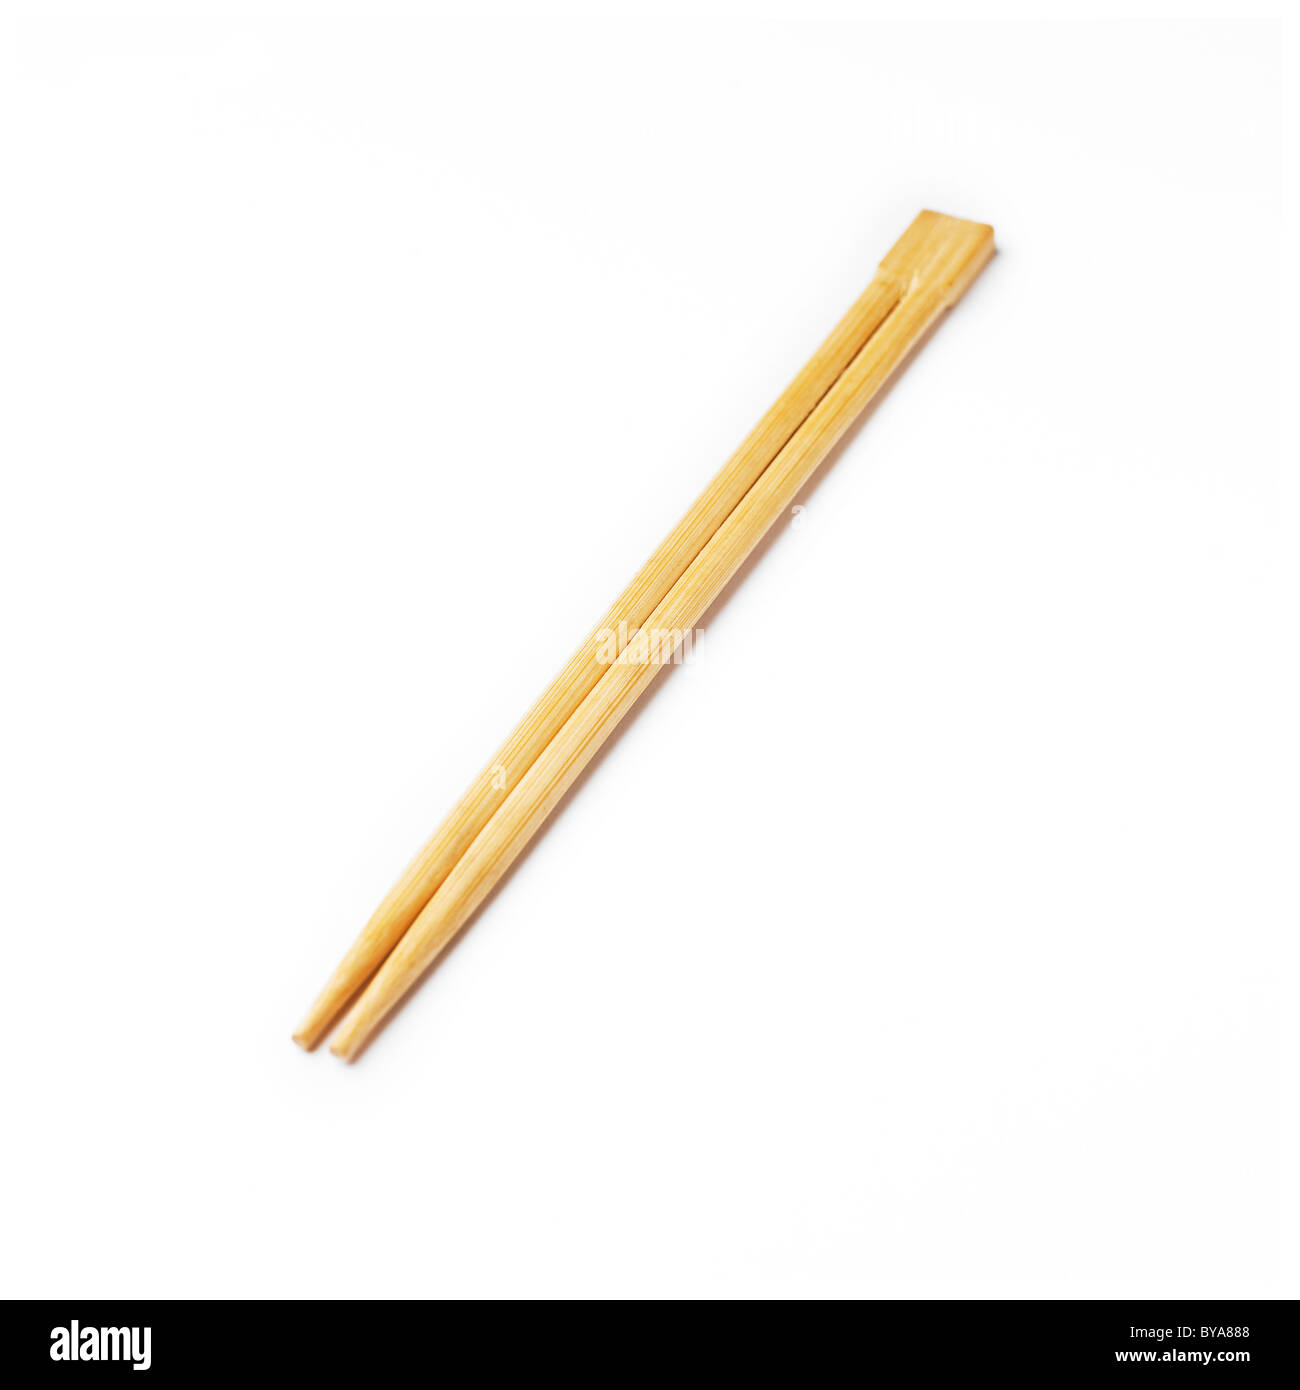 Chopsticks on a White Background Stock Photo